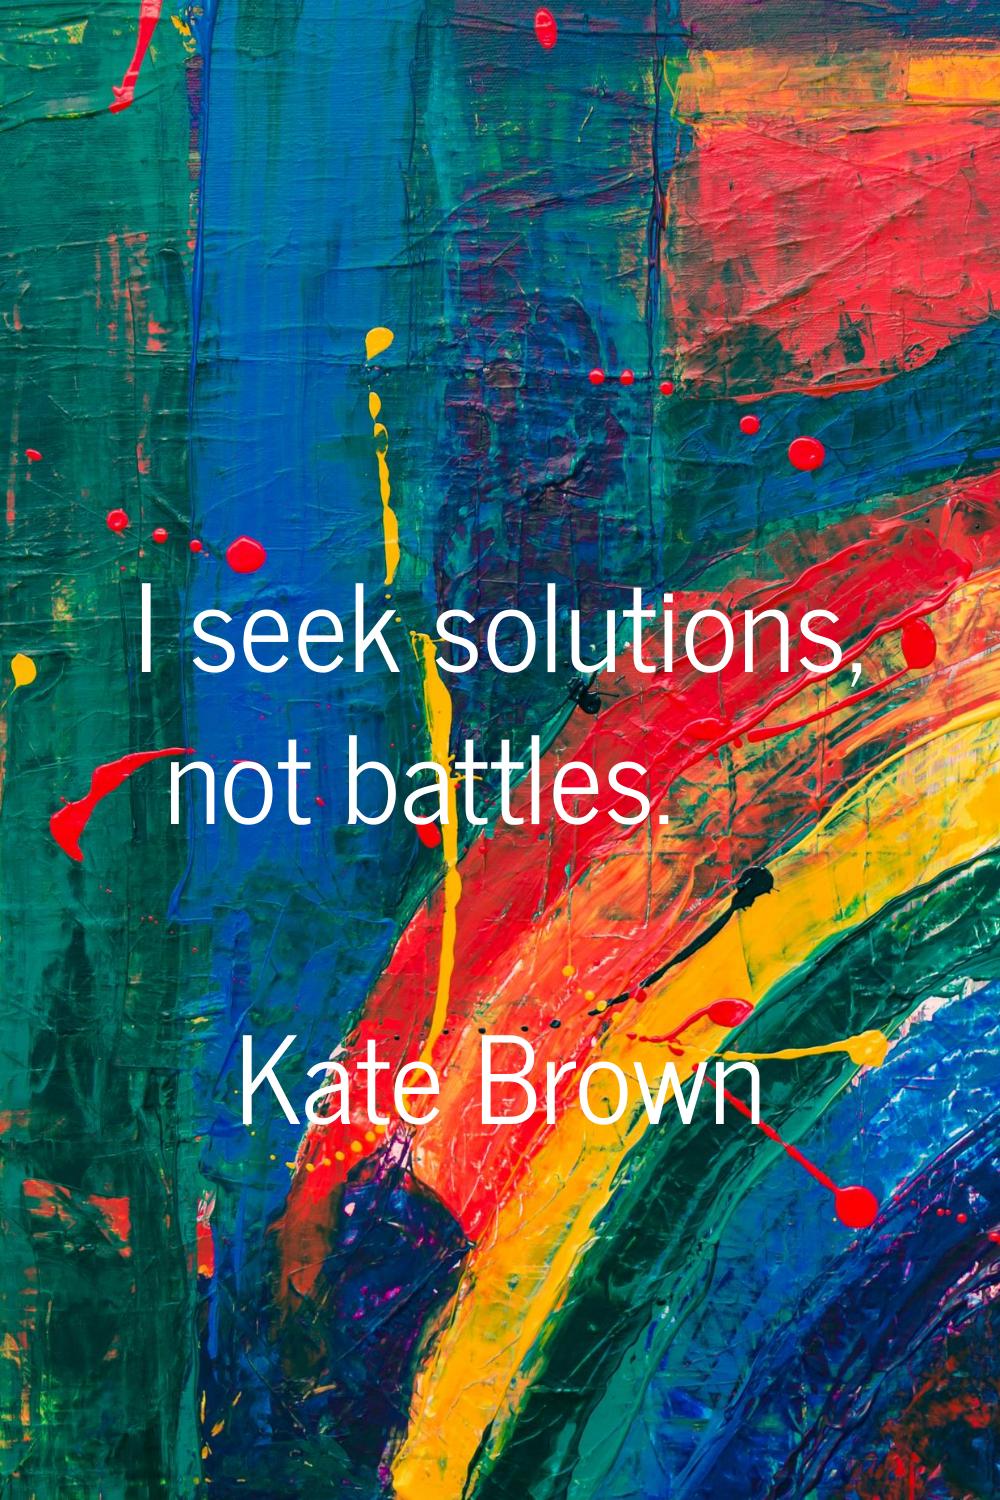 I seek solutions, not battles.